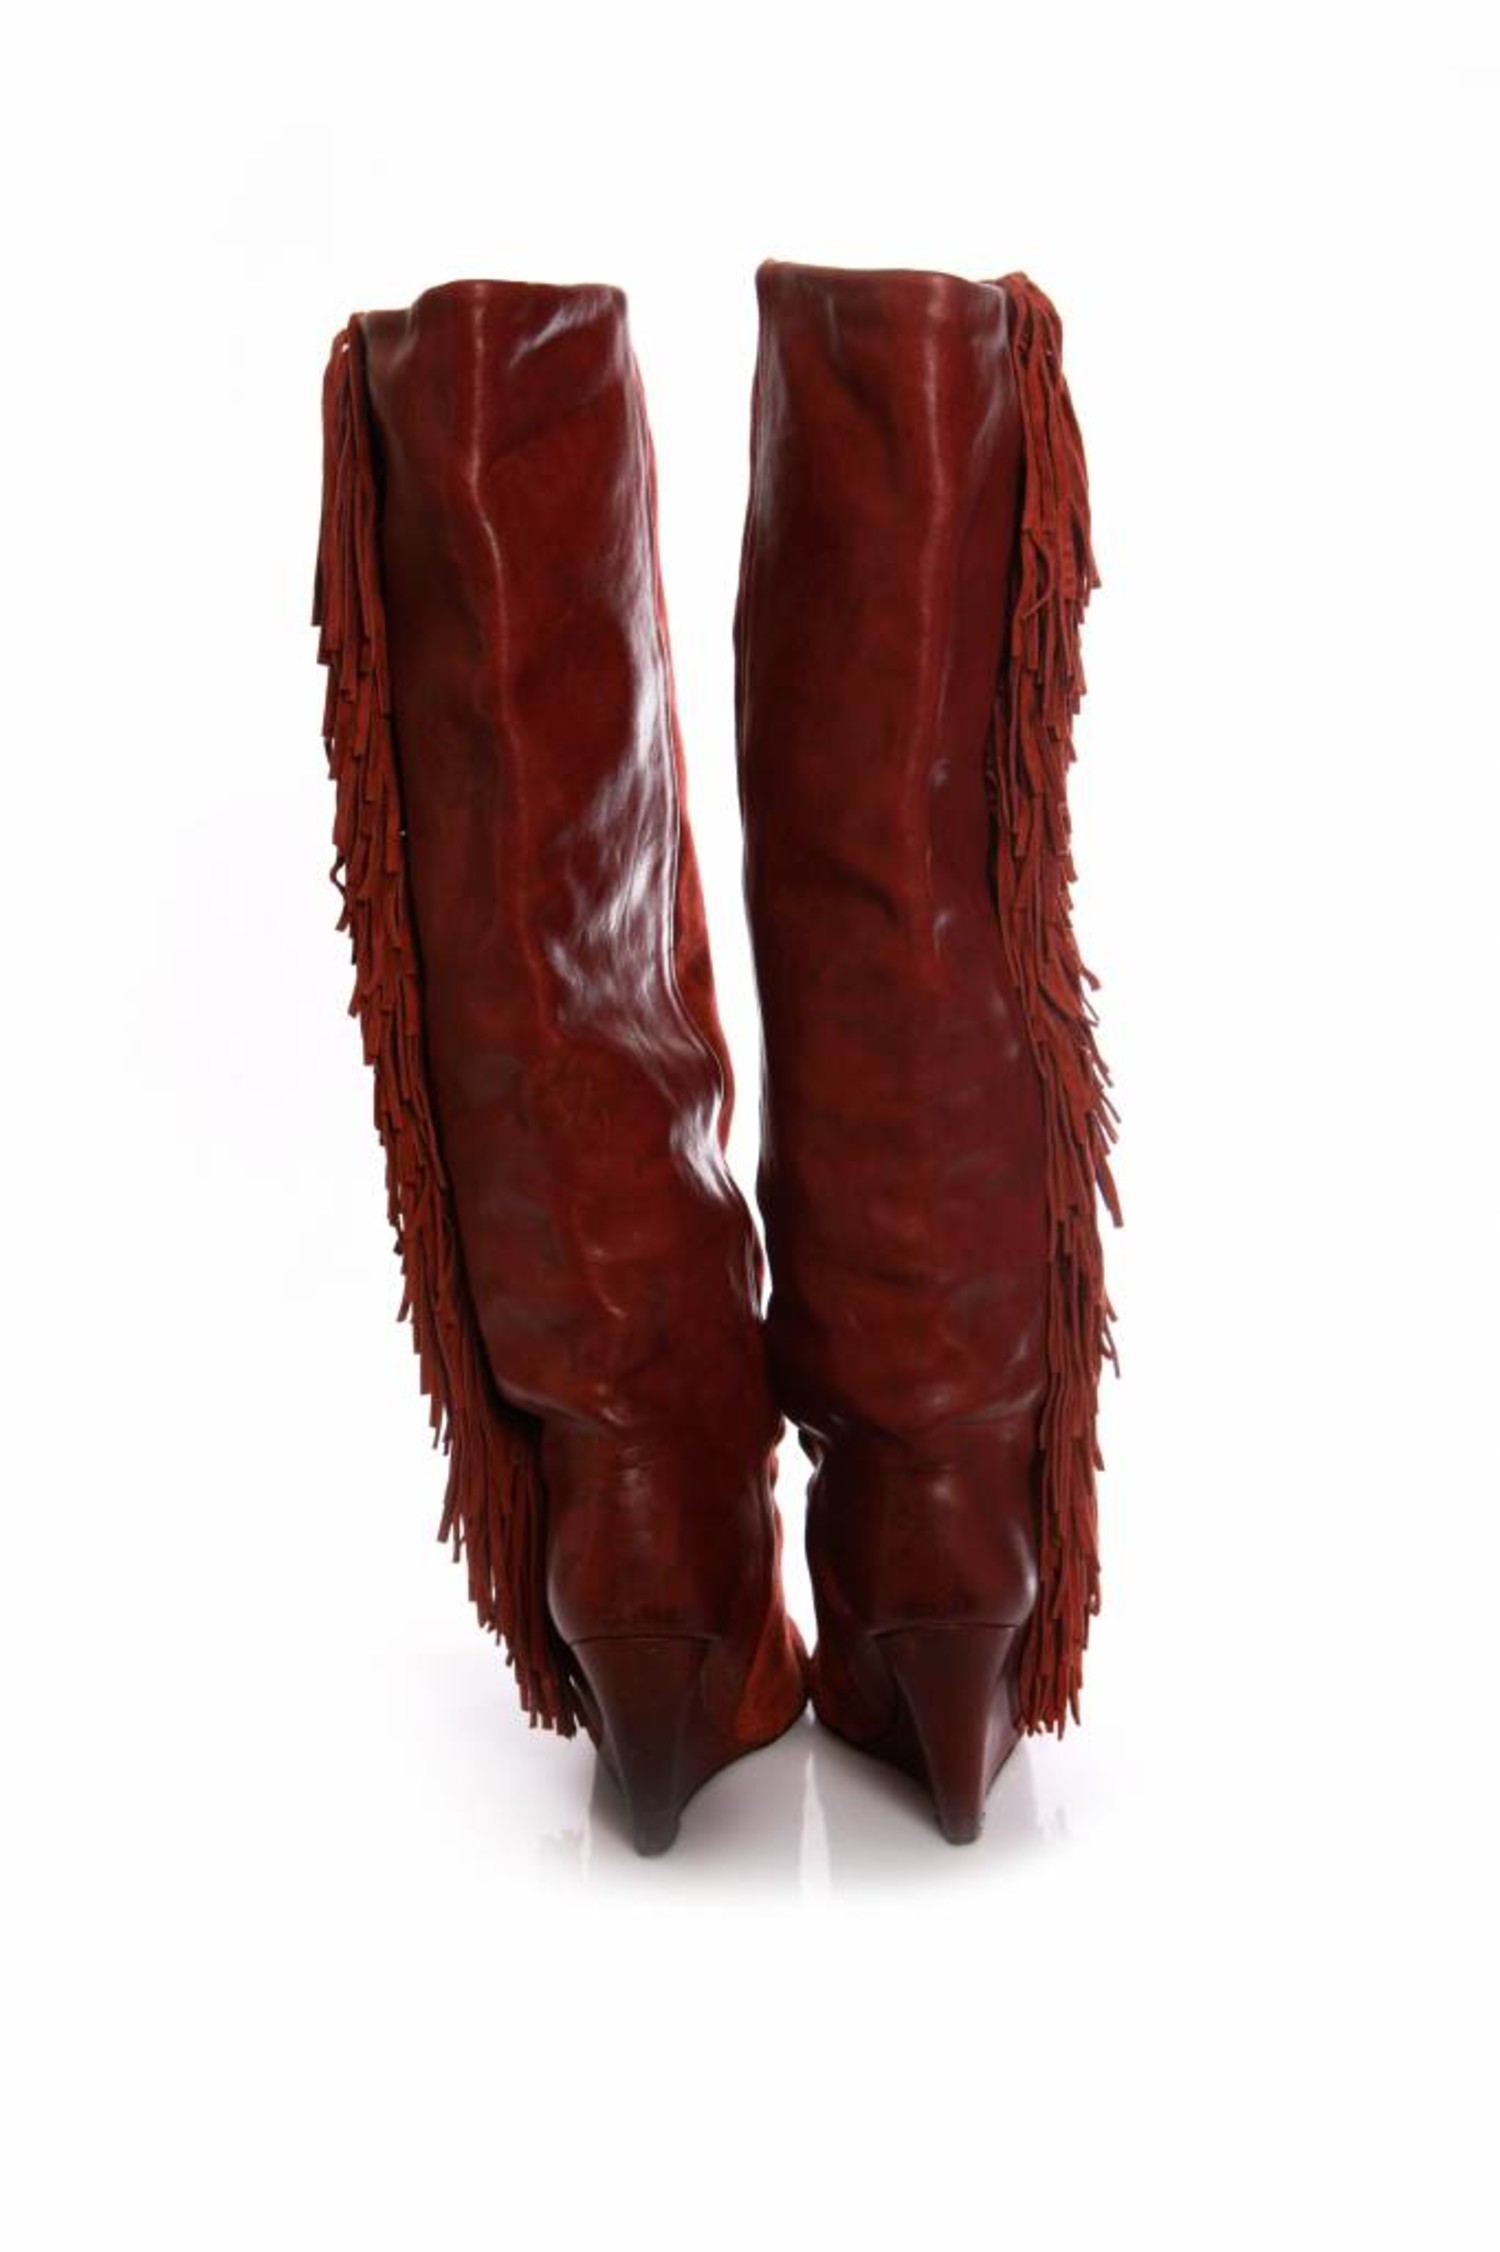 Absurd verraden regiment Isabel Marant, fringe wedge boots - Unique Designer Pieces